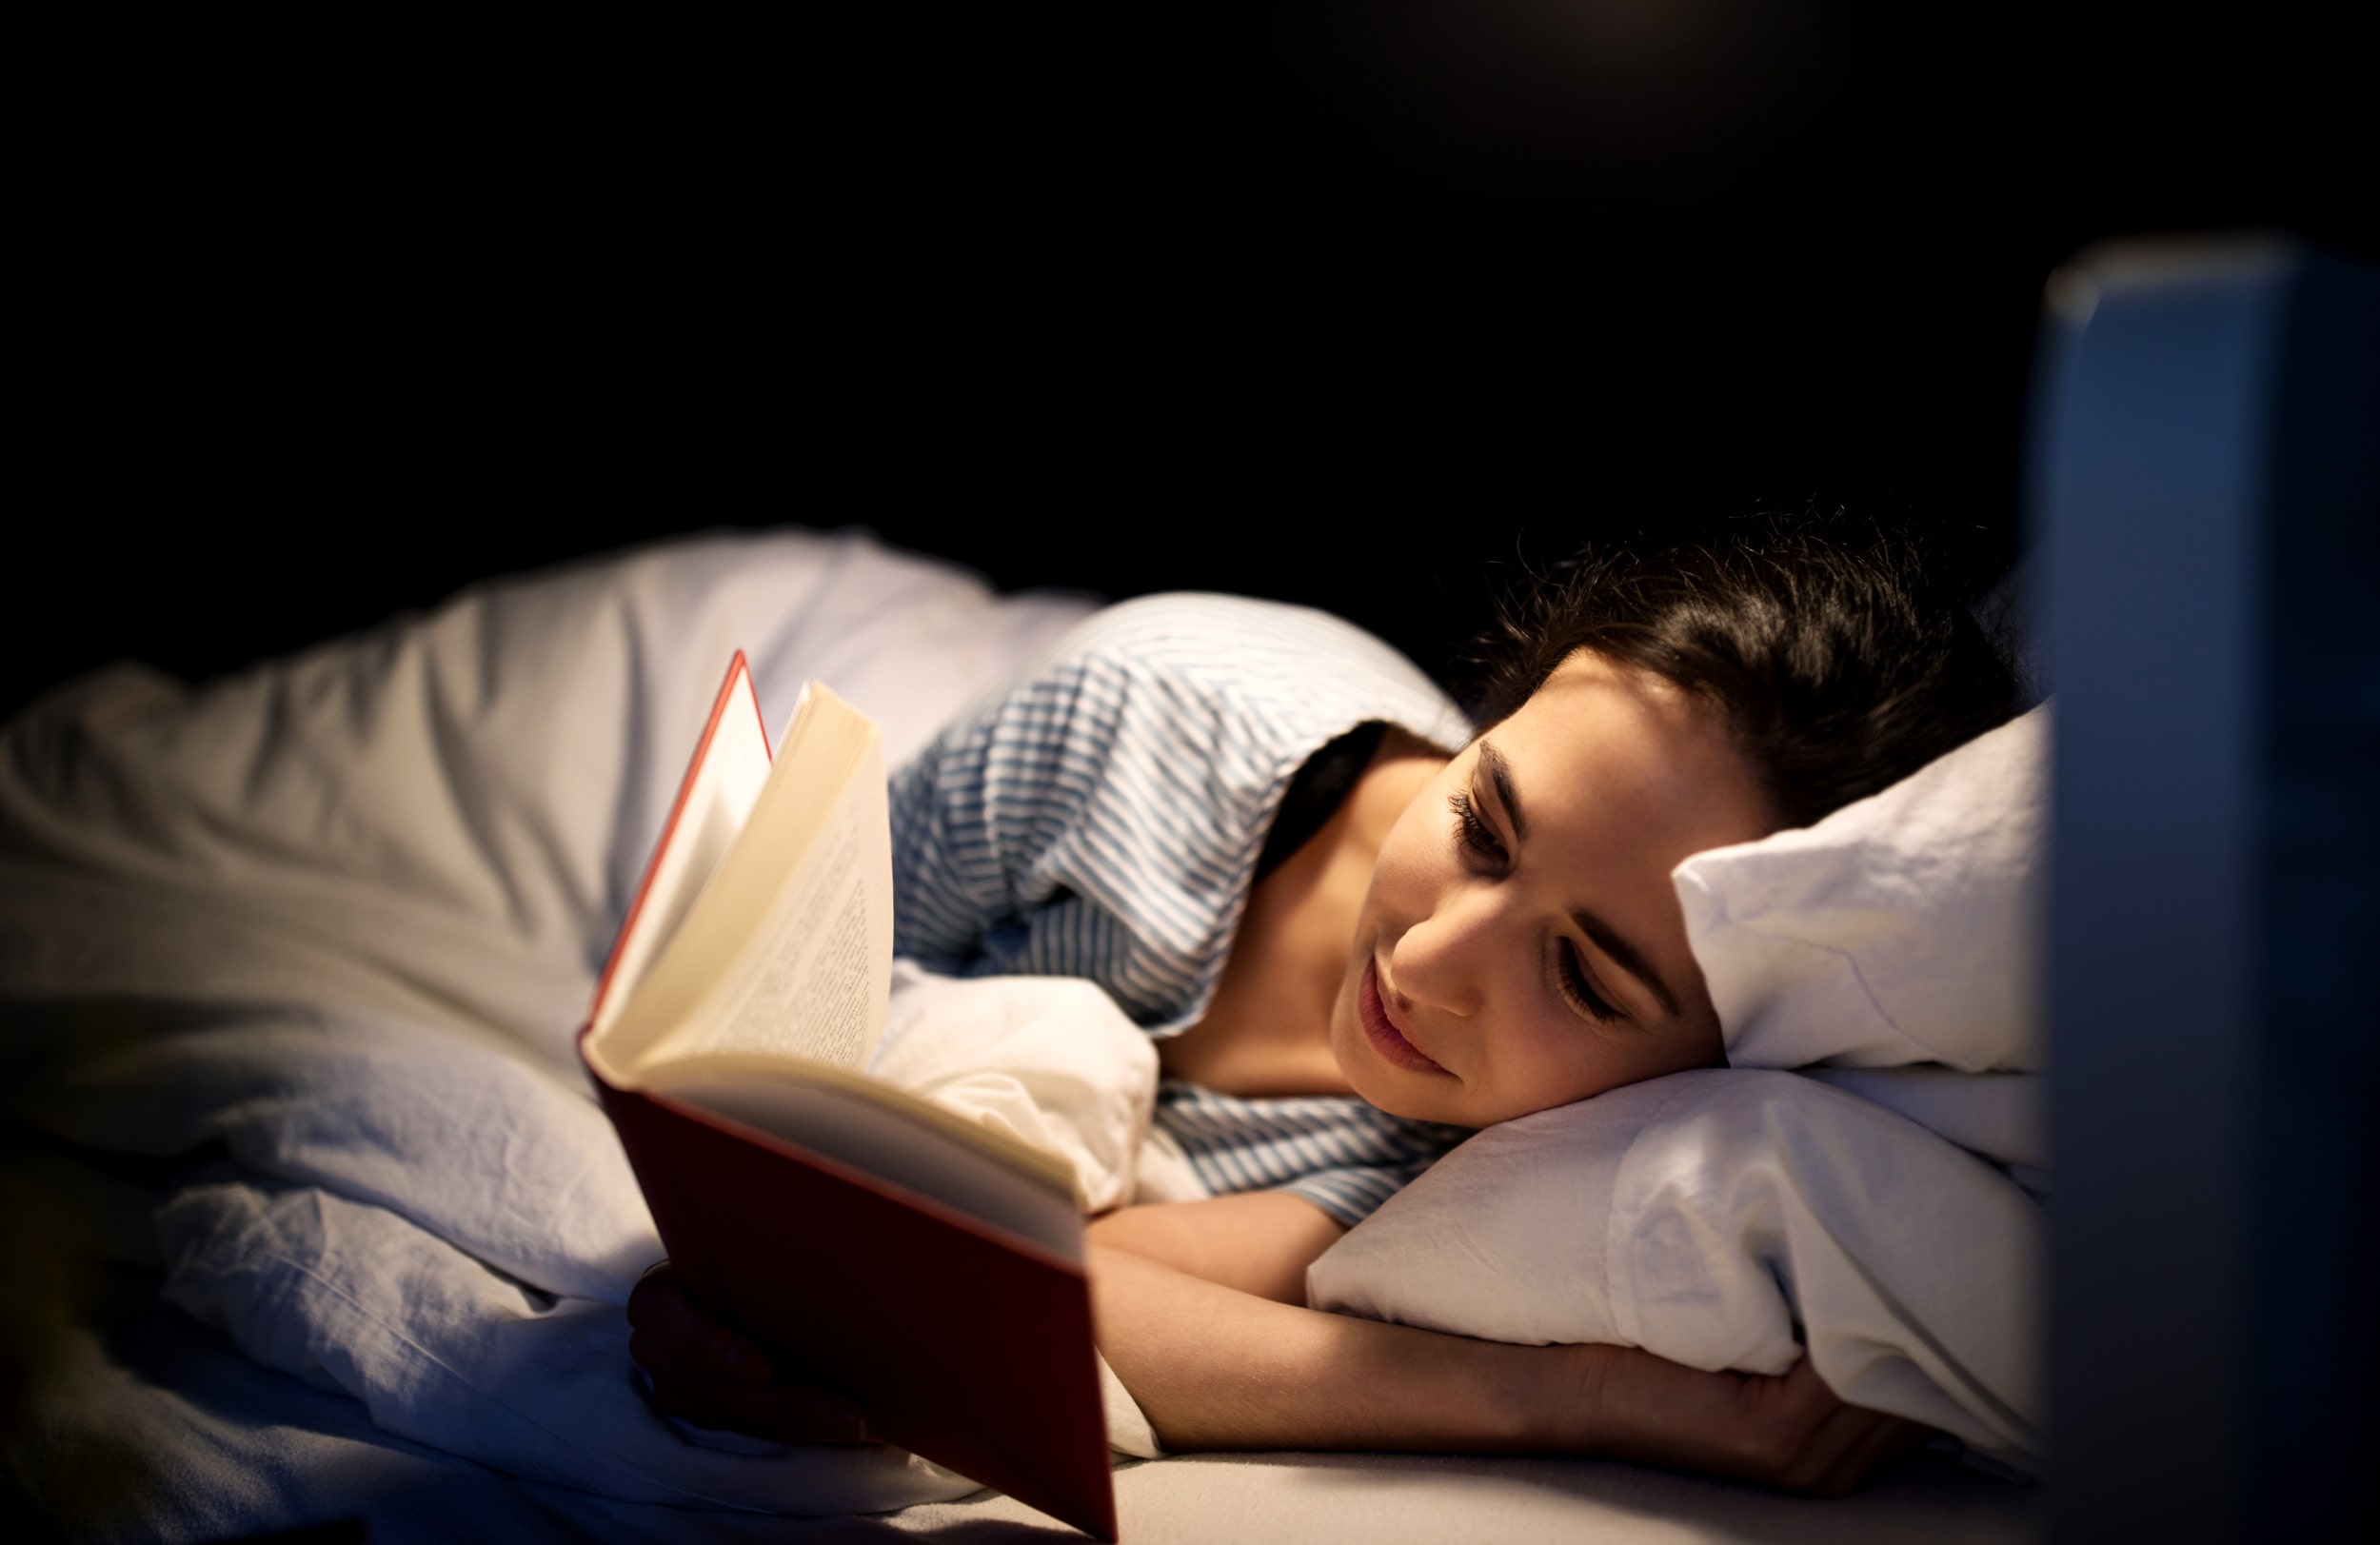 Reading at night